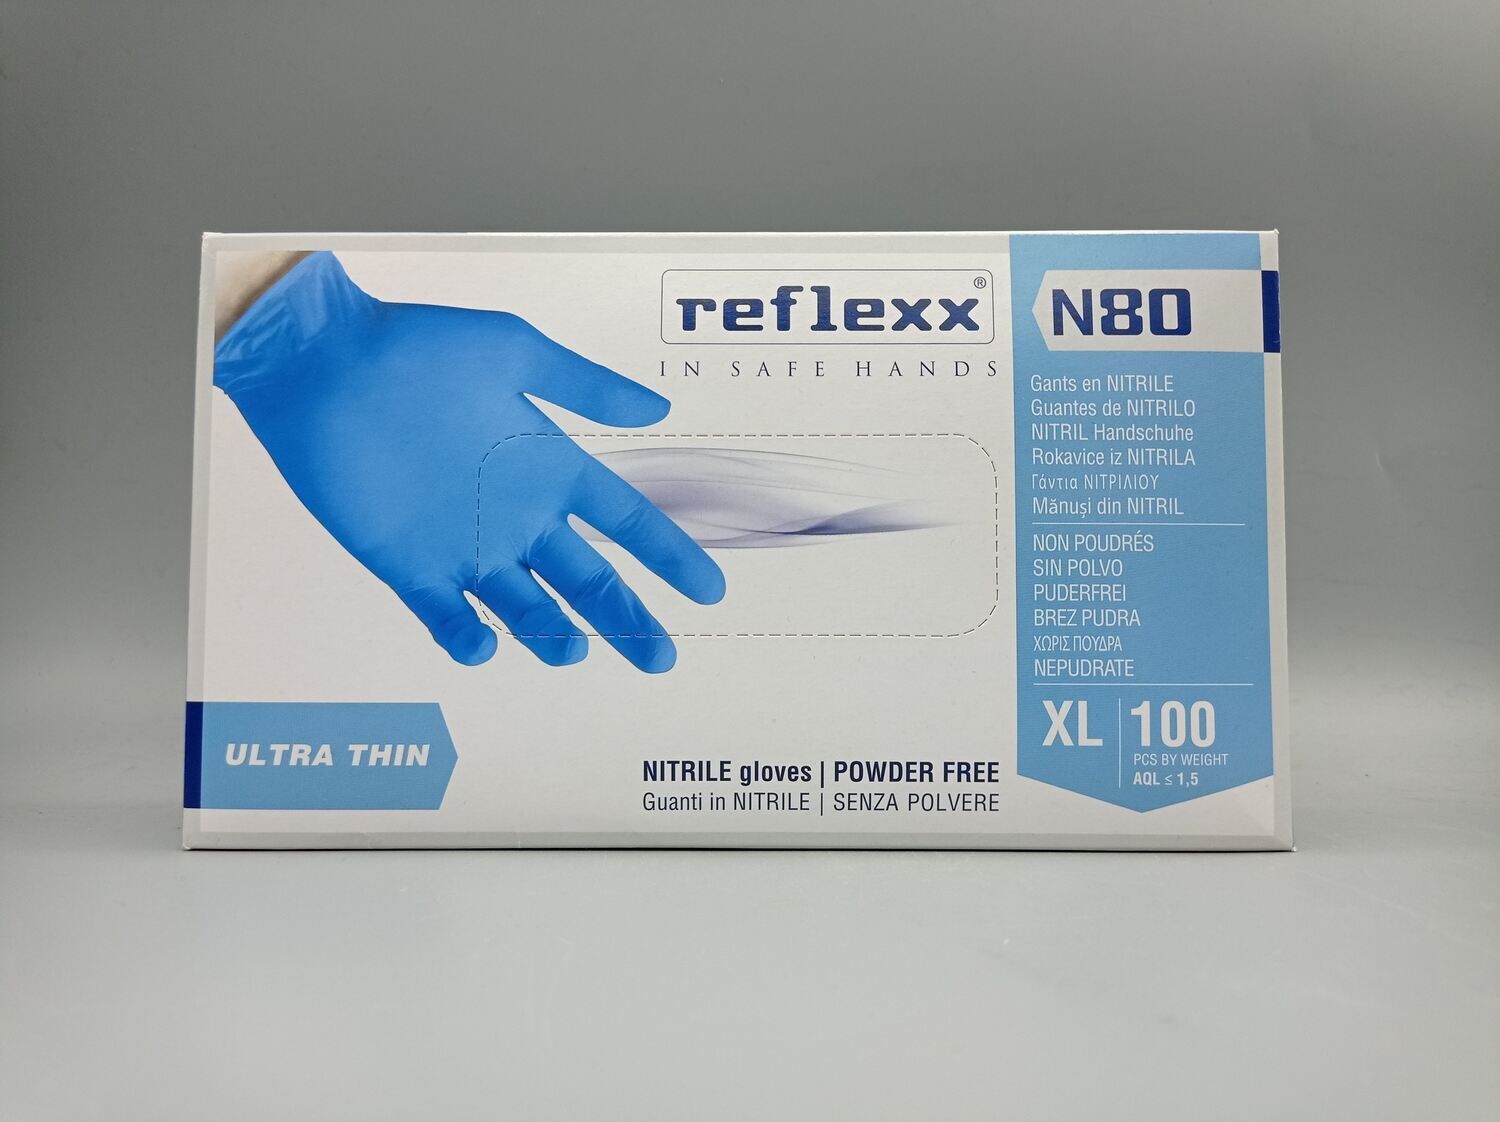 Reflexx N80 - Guanti in Nitrile Ultra Thin - Taglia XL